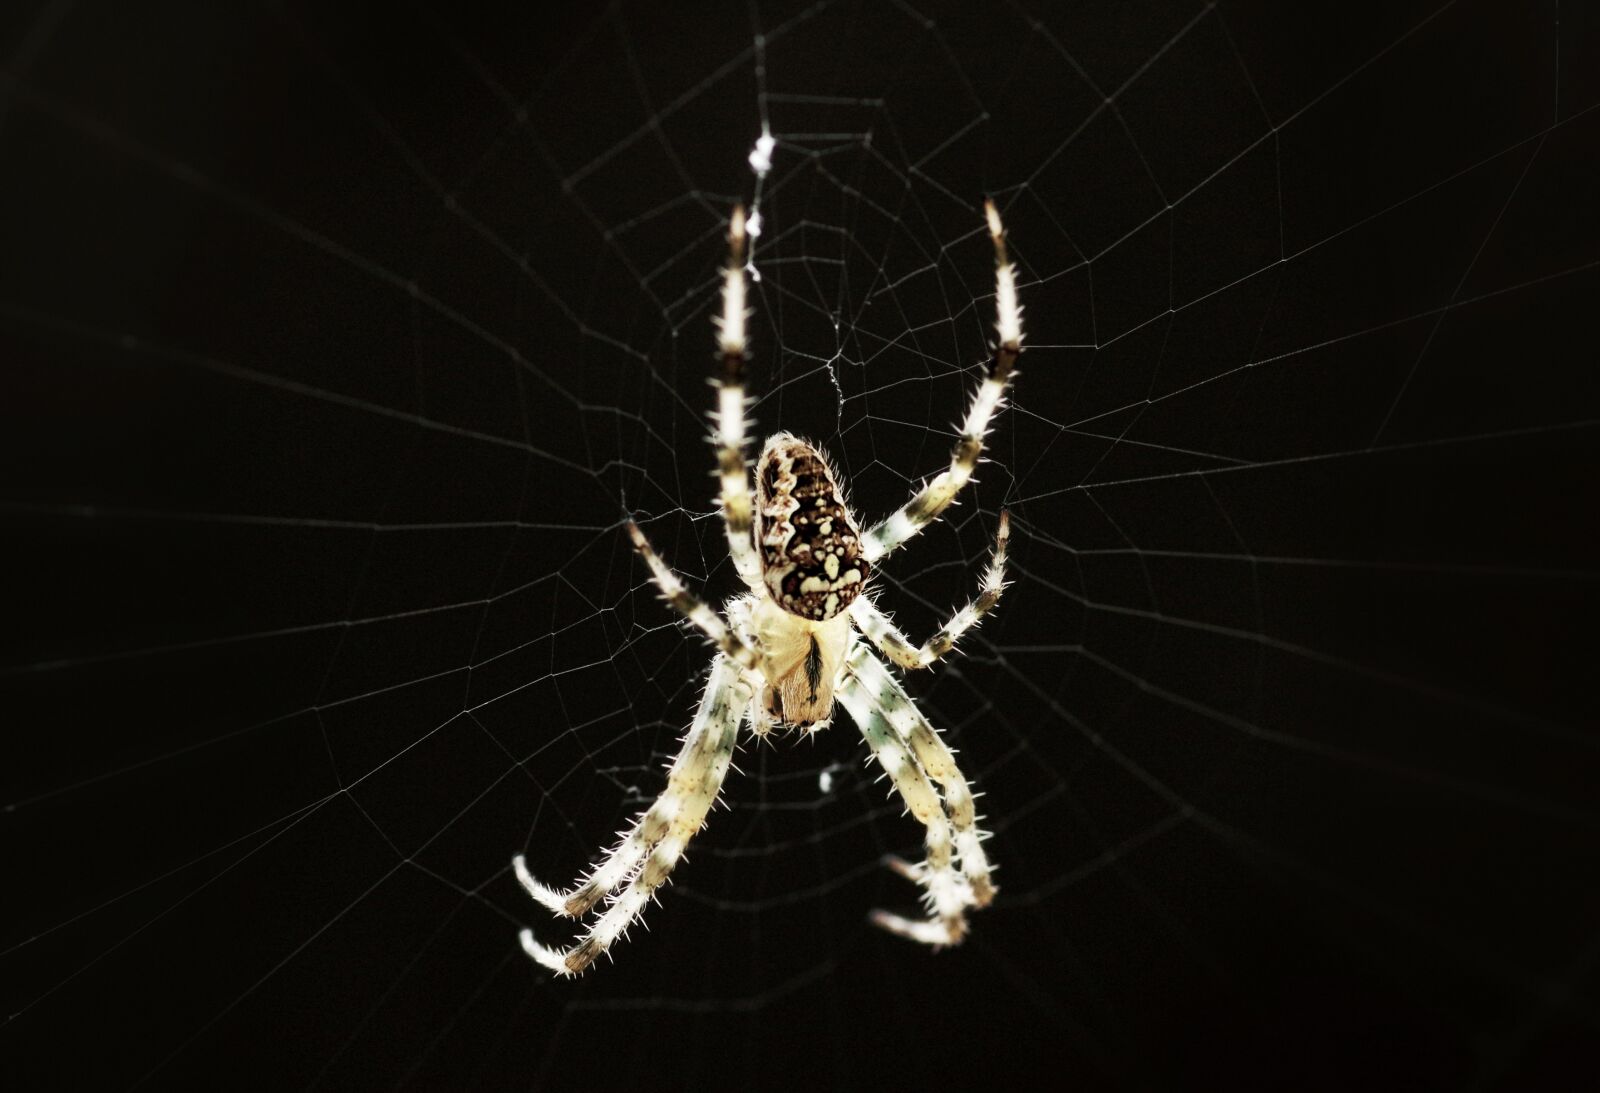 Pentax smc D-FA 100mm F2.8 macro sample photo. Spider, fear, creepy photography